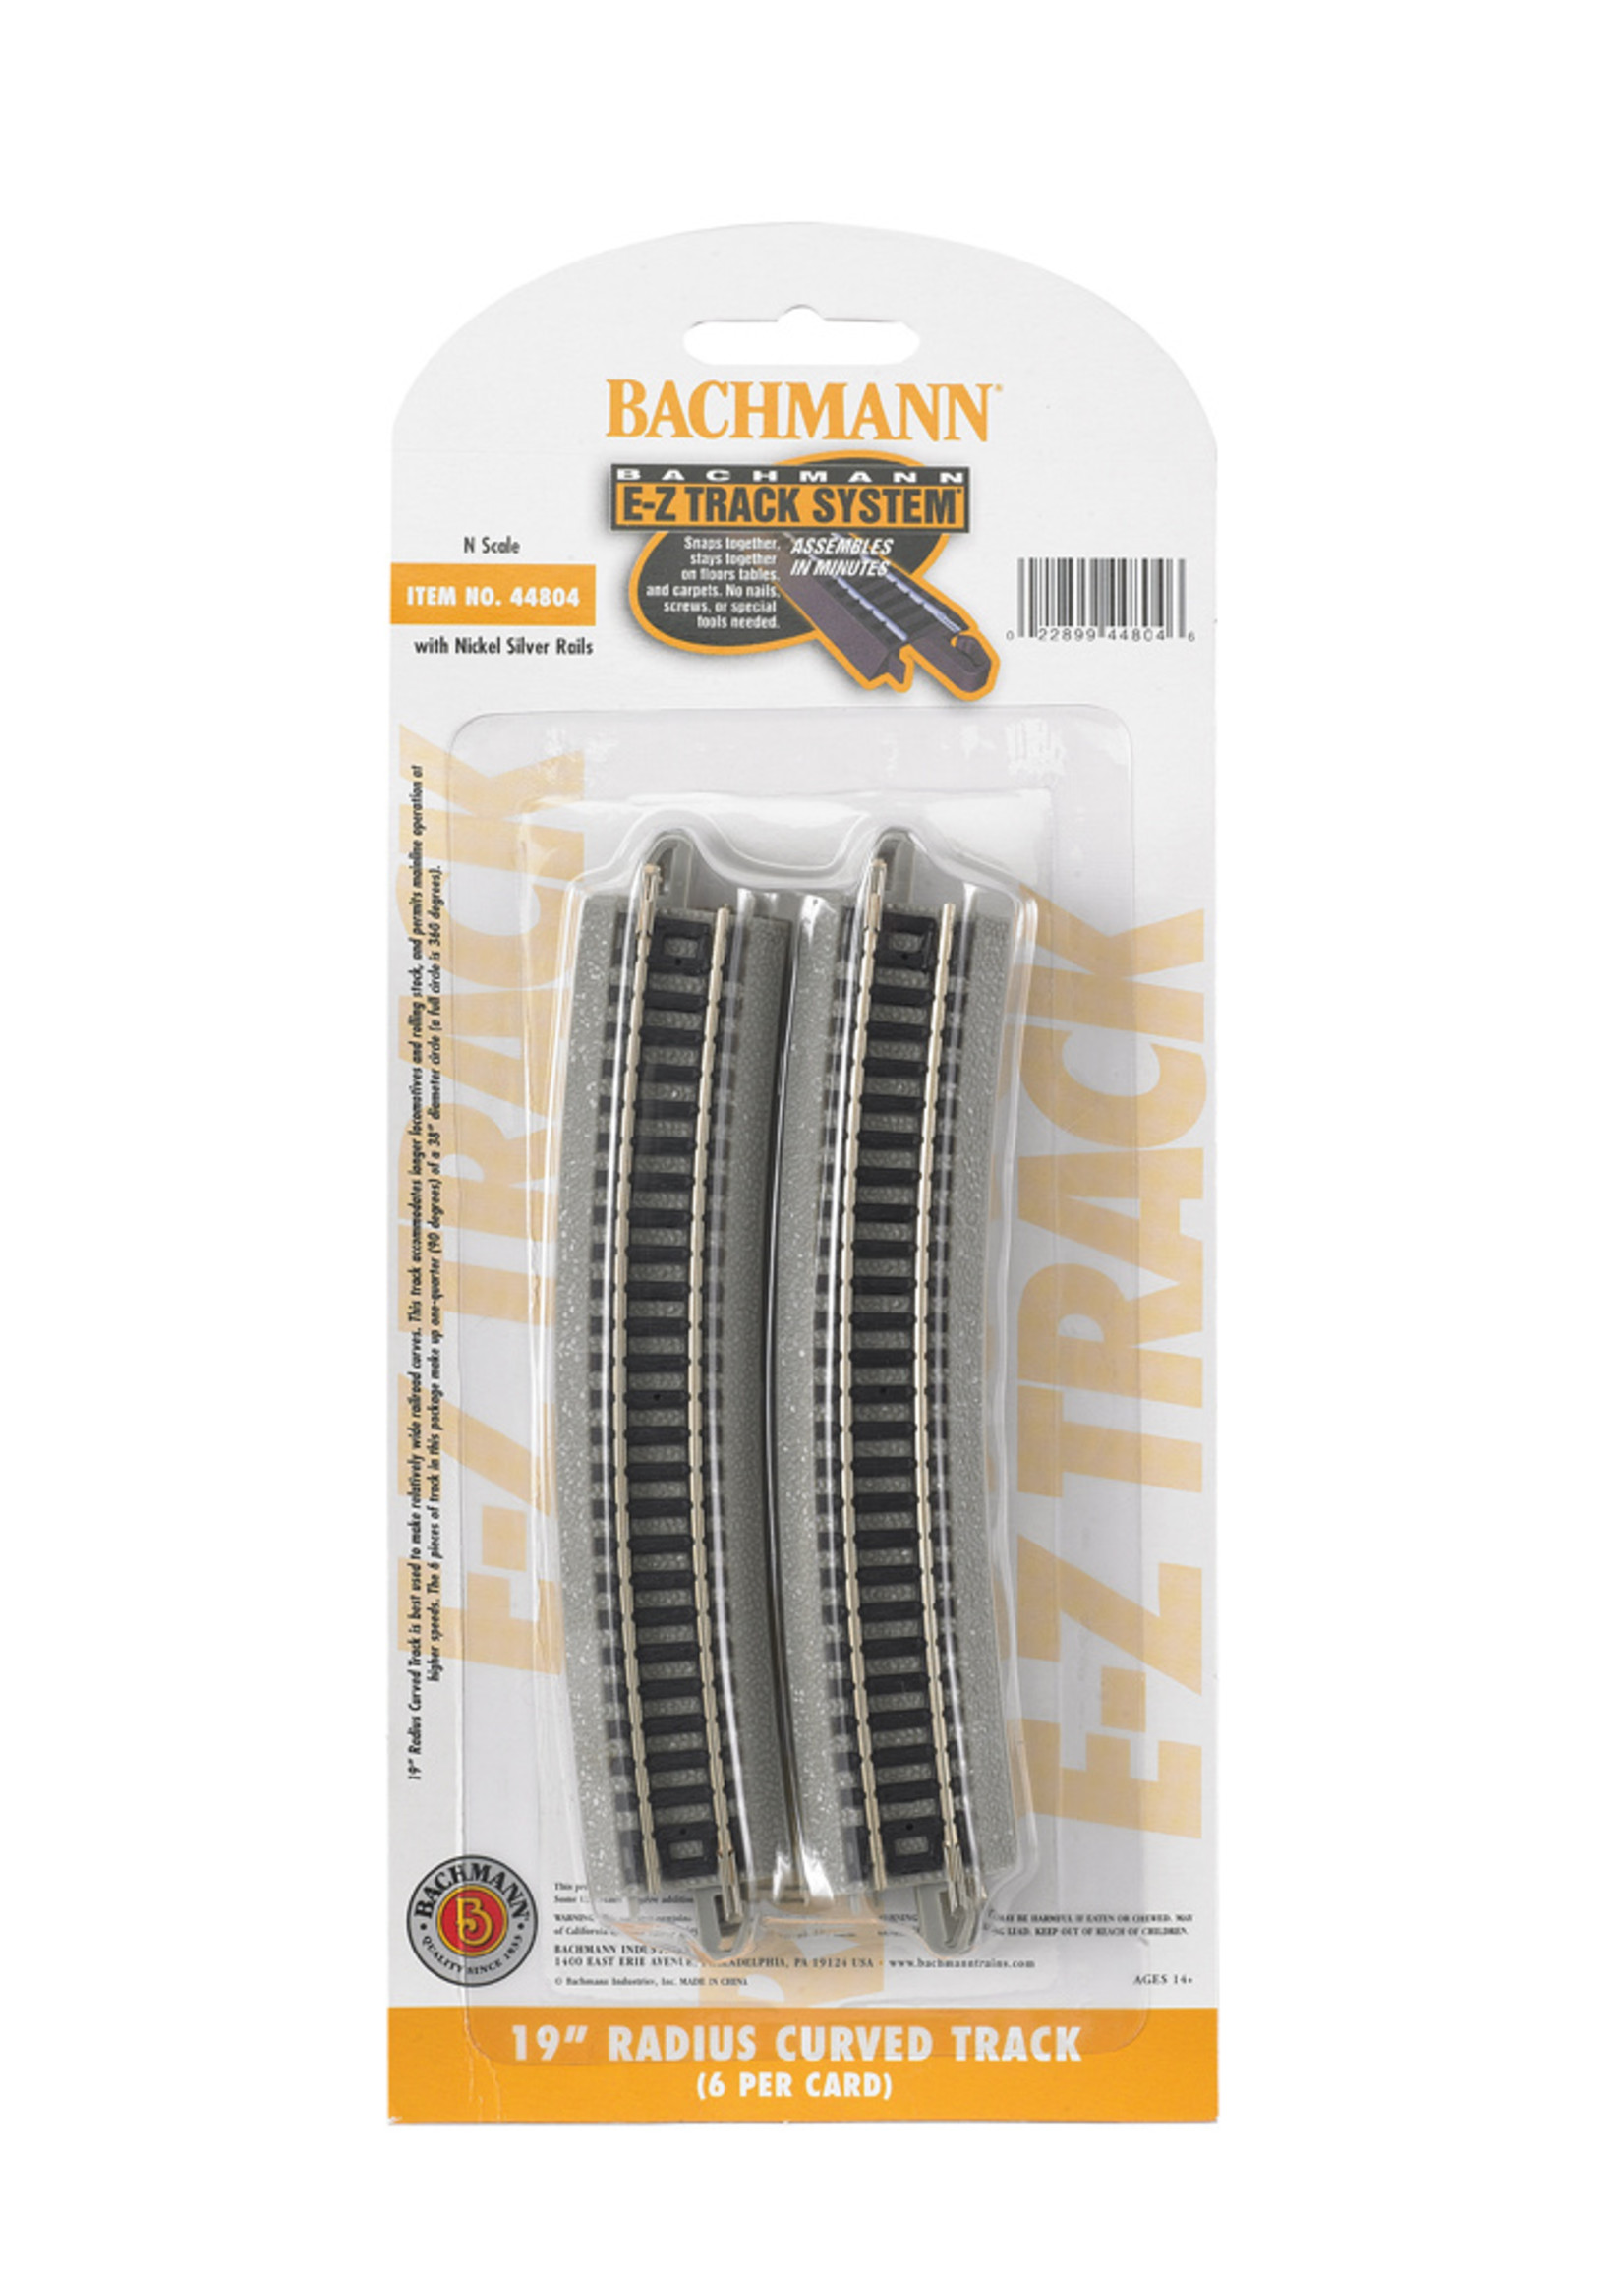 Bachmann 44804 - 19" Radius Curved - N Scale EZ Track